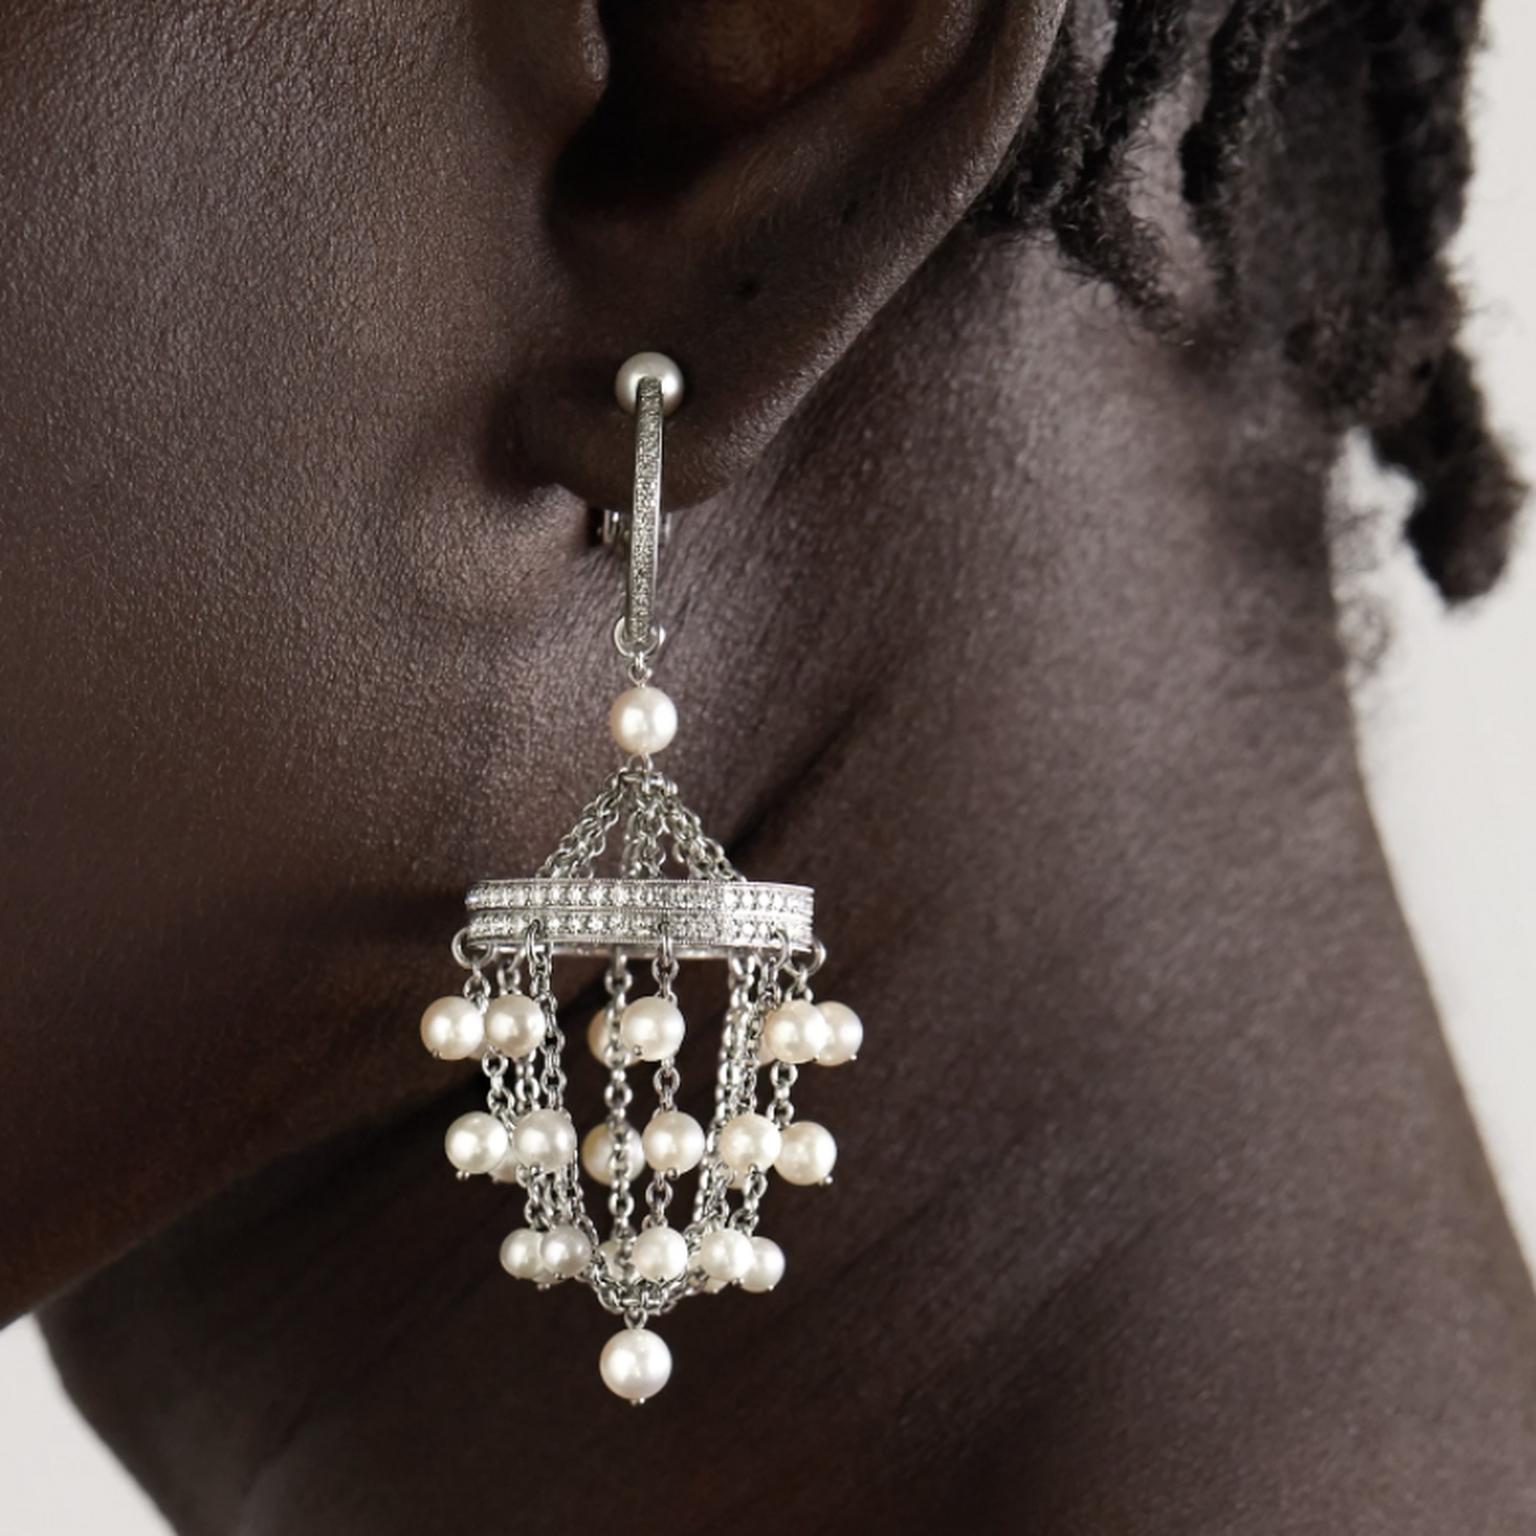 Chandellier earrings by Nadia Morgenthaler on model